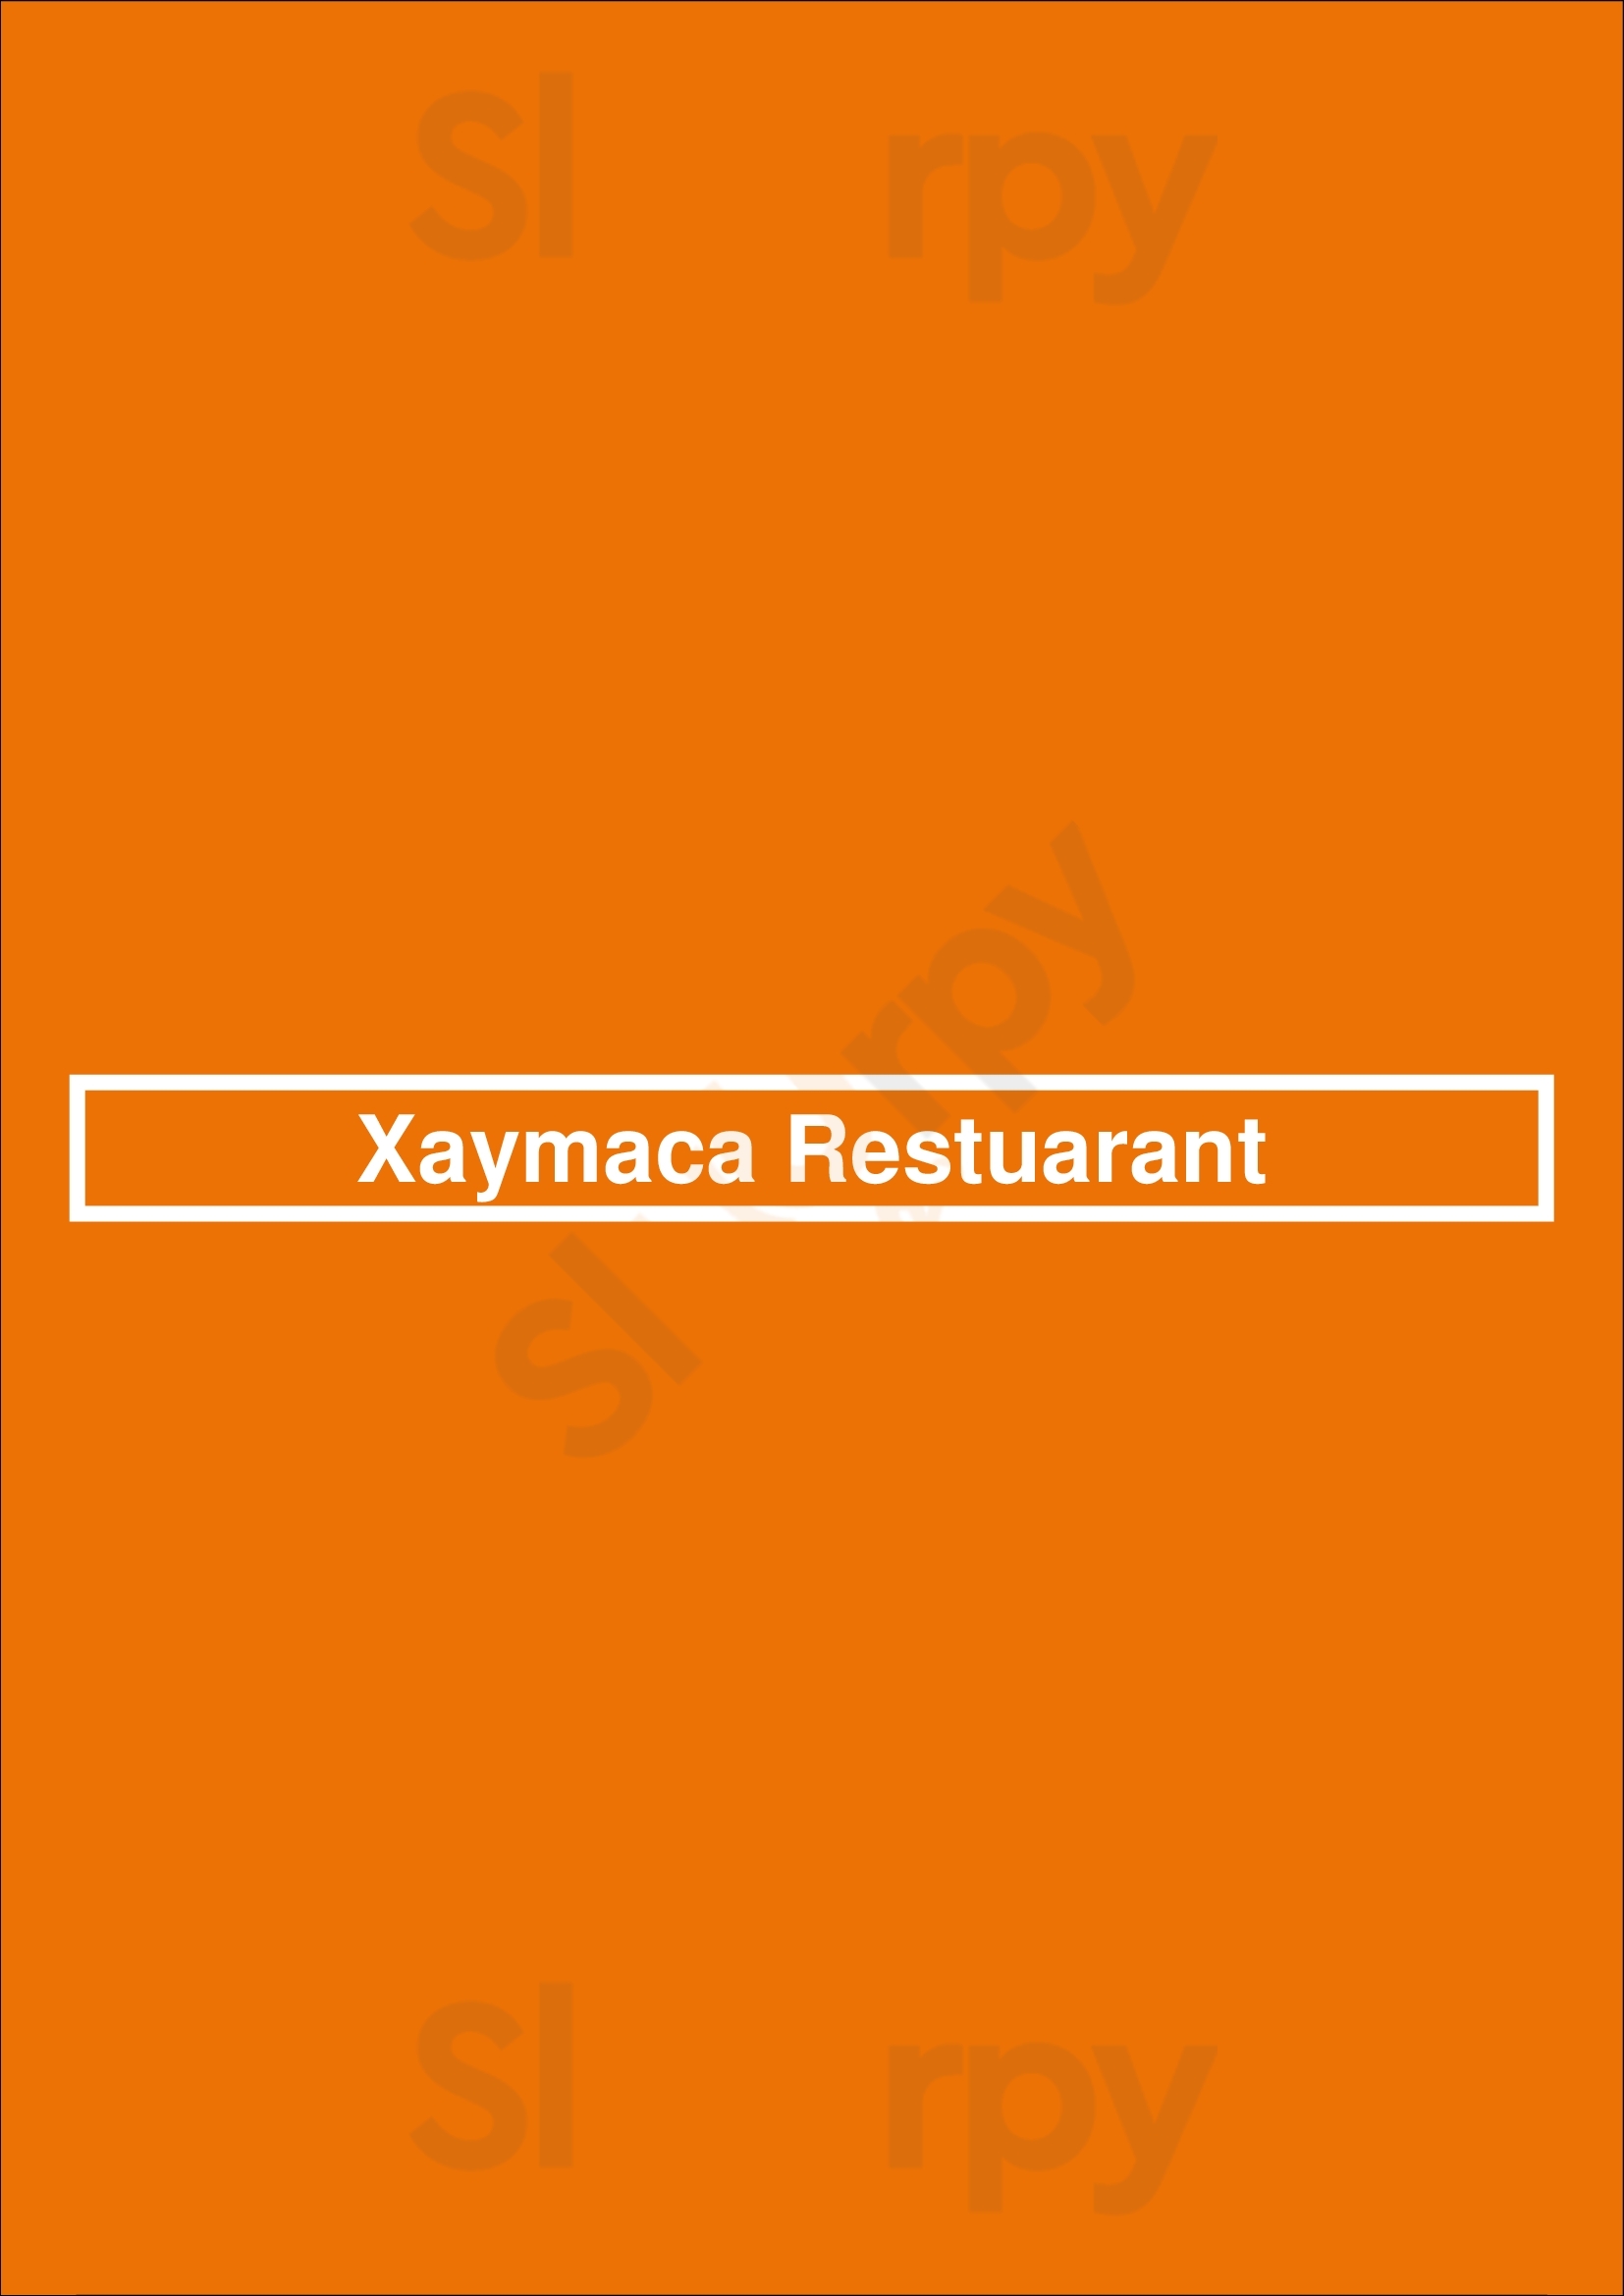 Xaymaca Restuarant Brampton Menu - 1